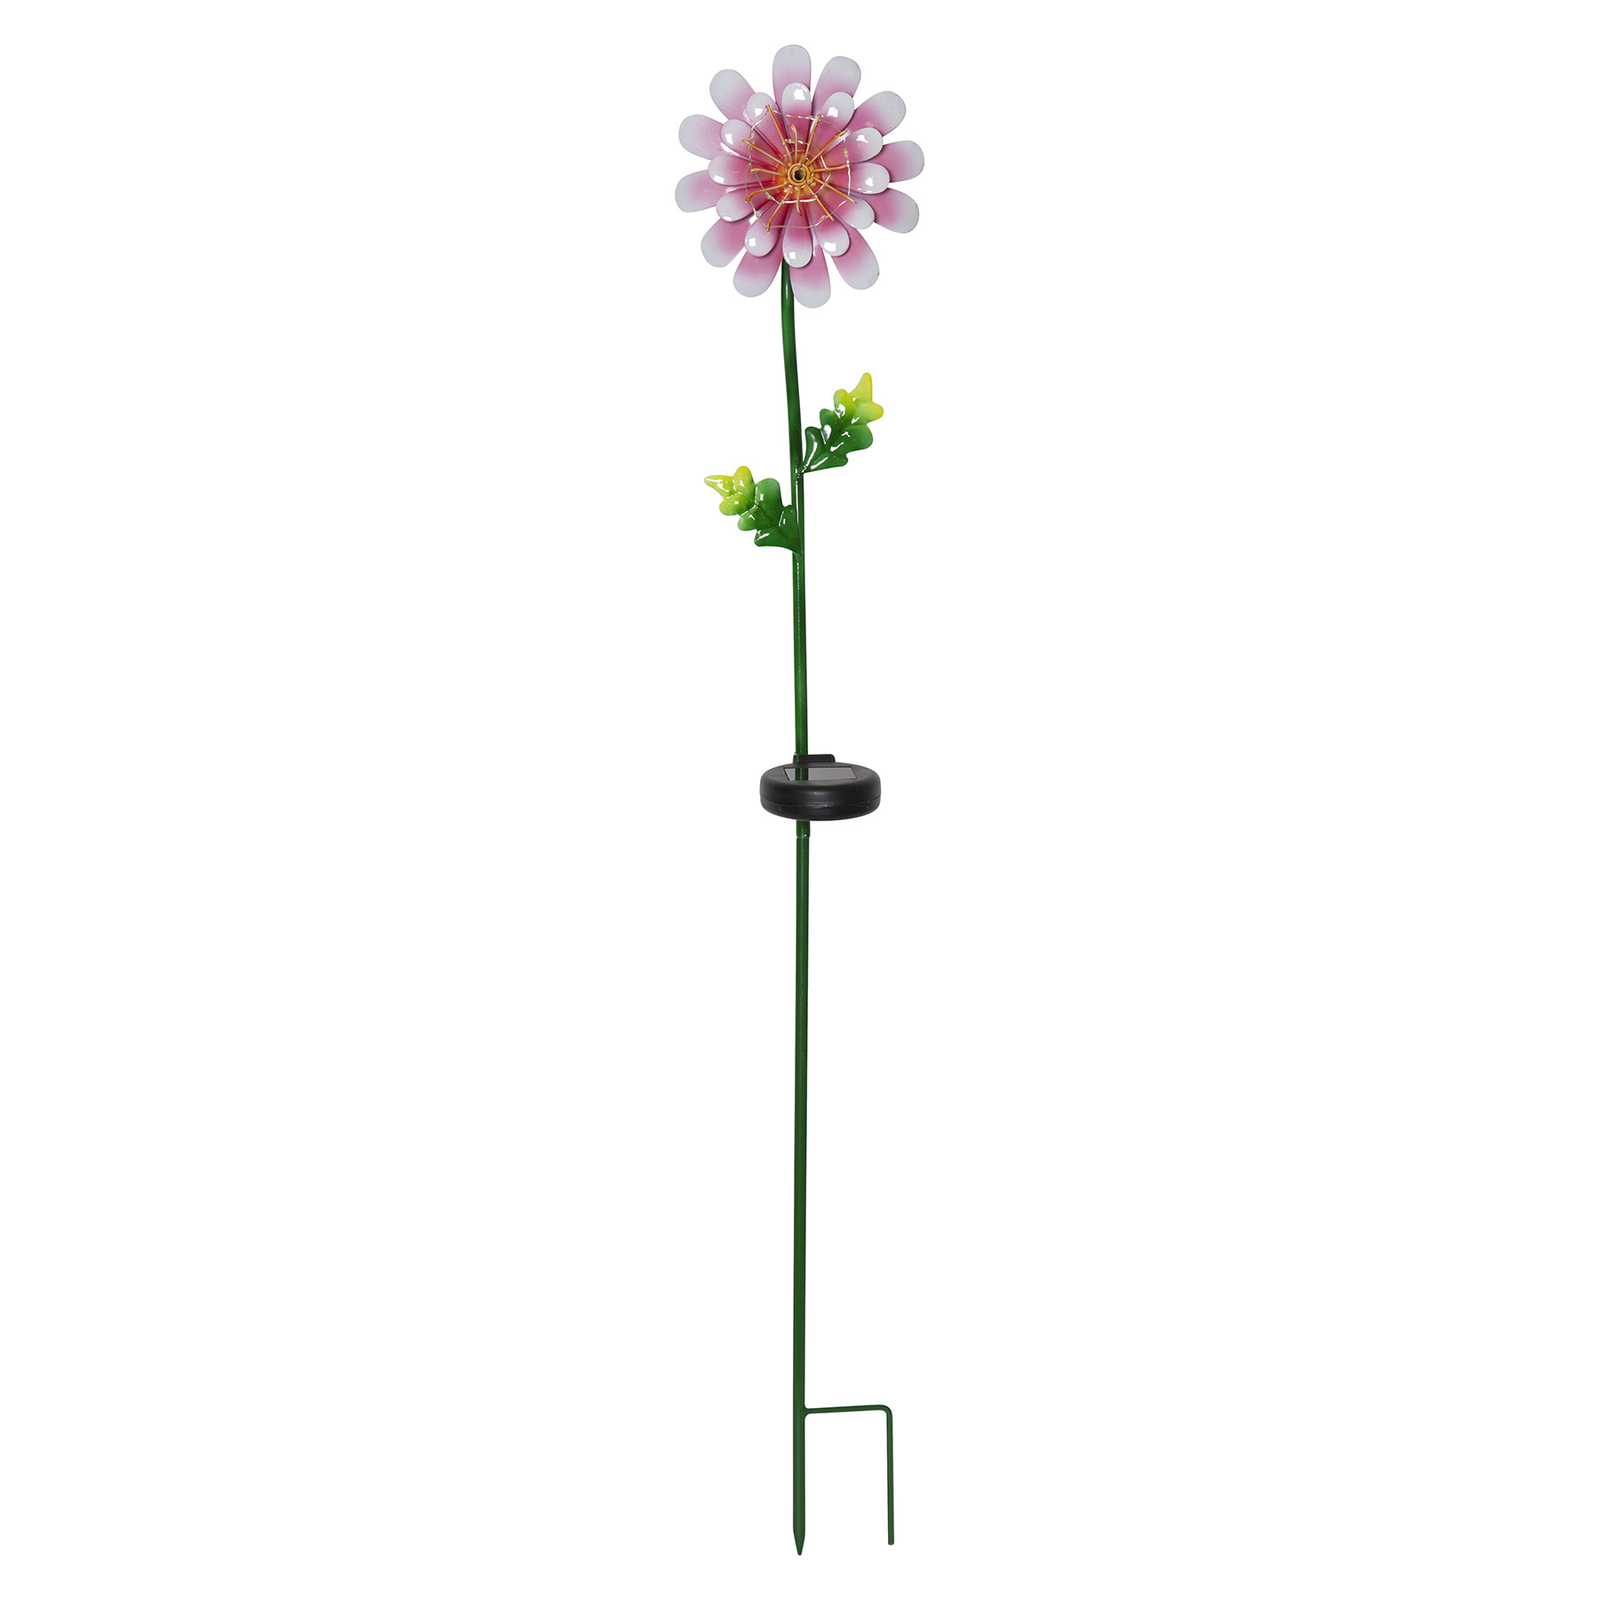 LED-solcellslampa Pink Daisy i blomform